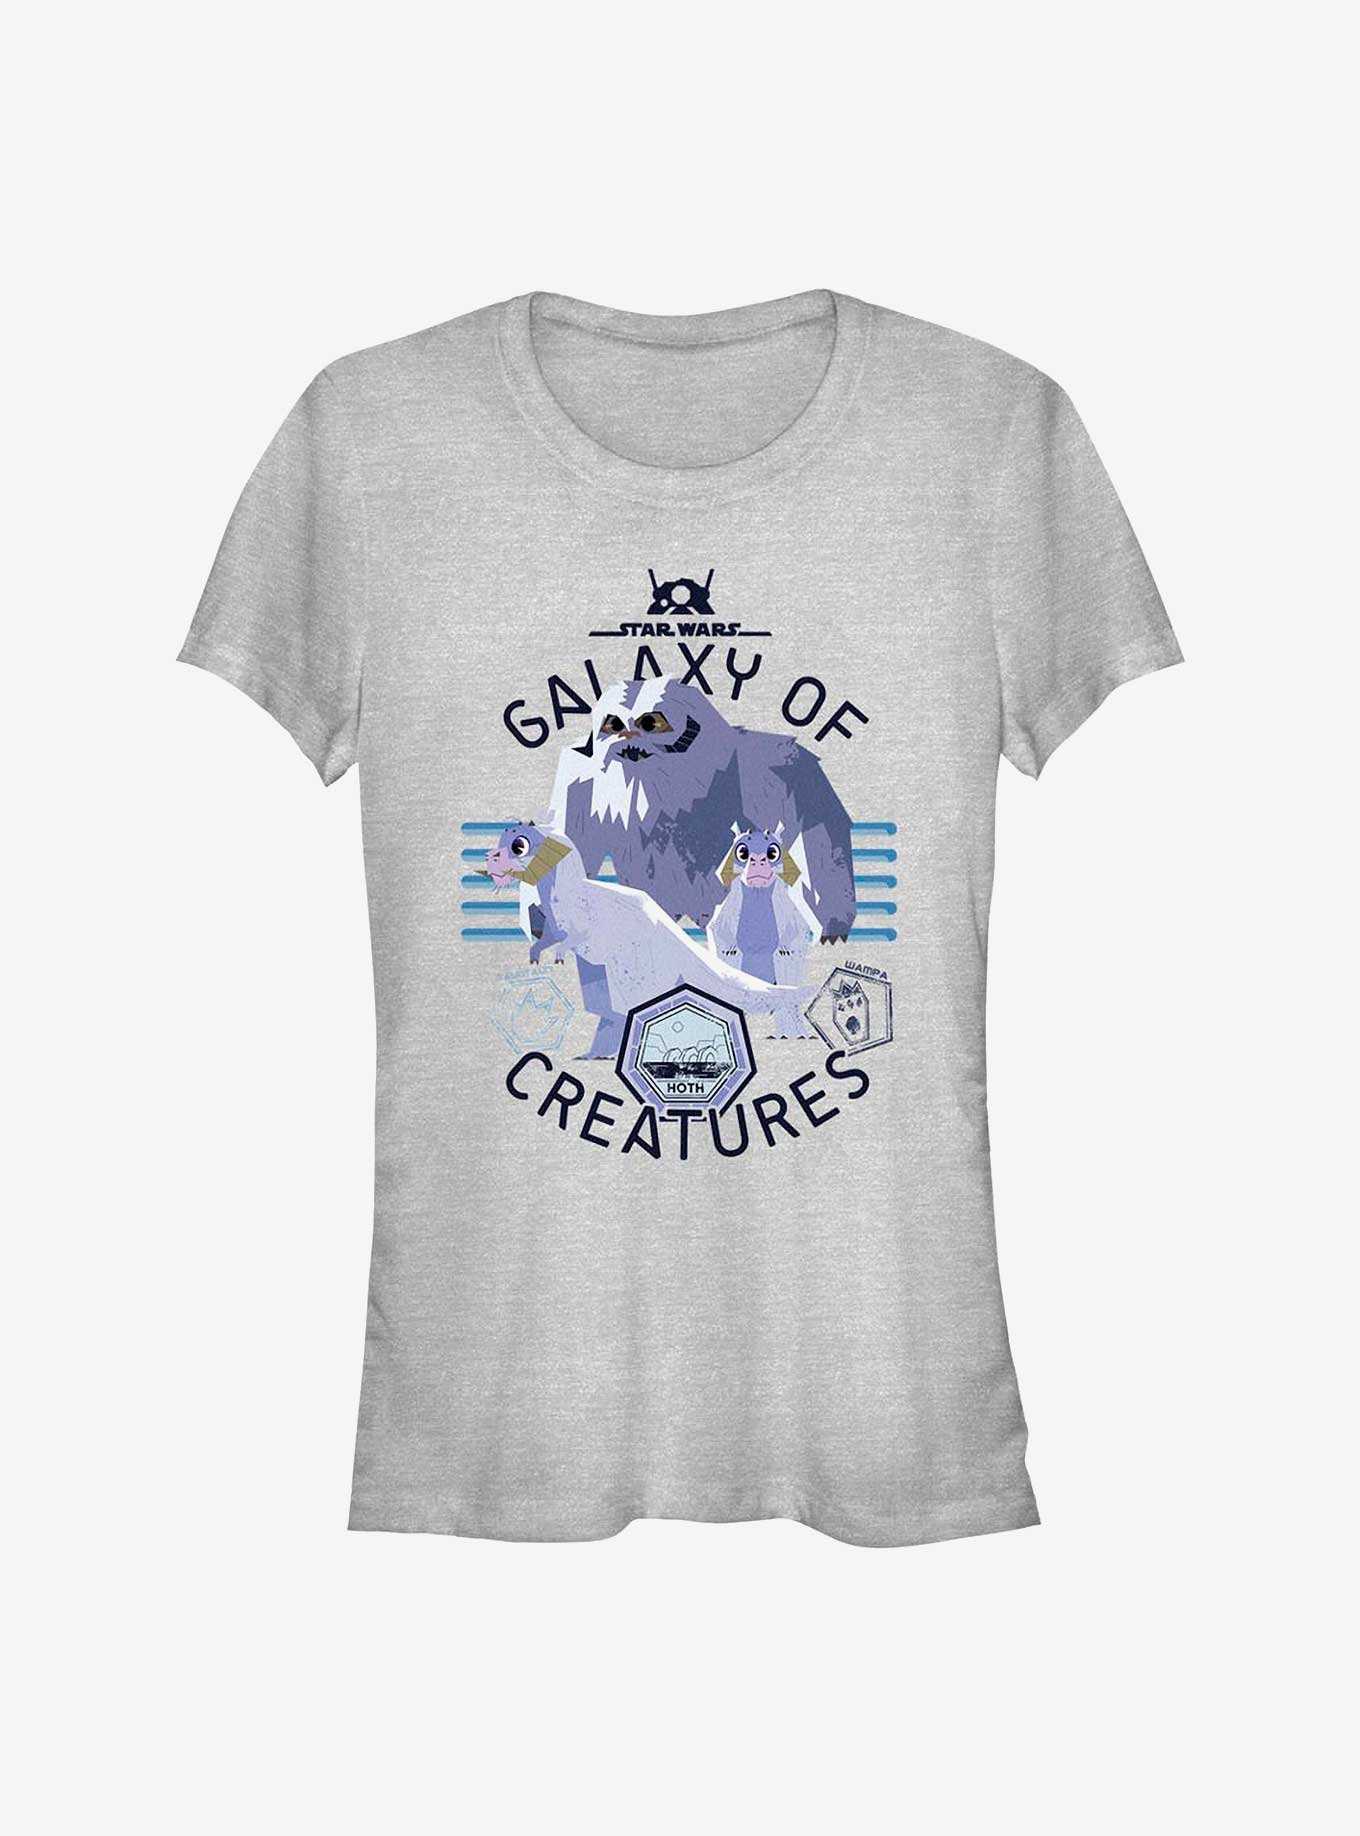 Star Wars: Galaxy Of Creatures Hoth Native Habits Girls T-Shirt, , hi-res